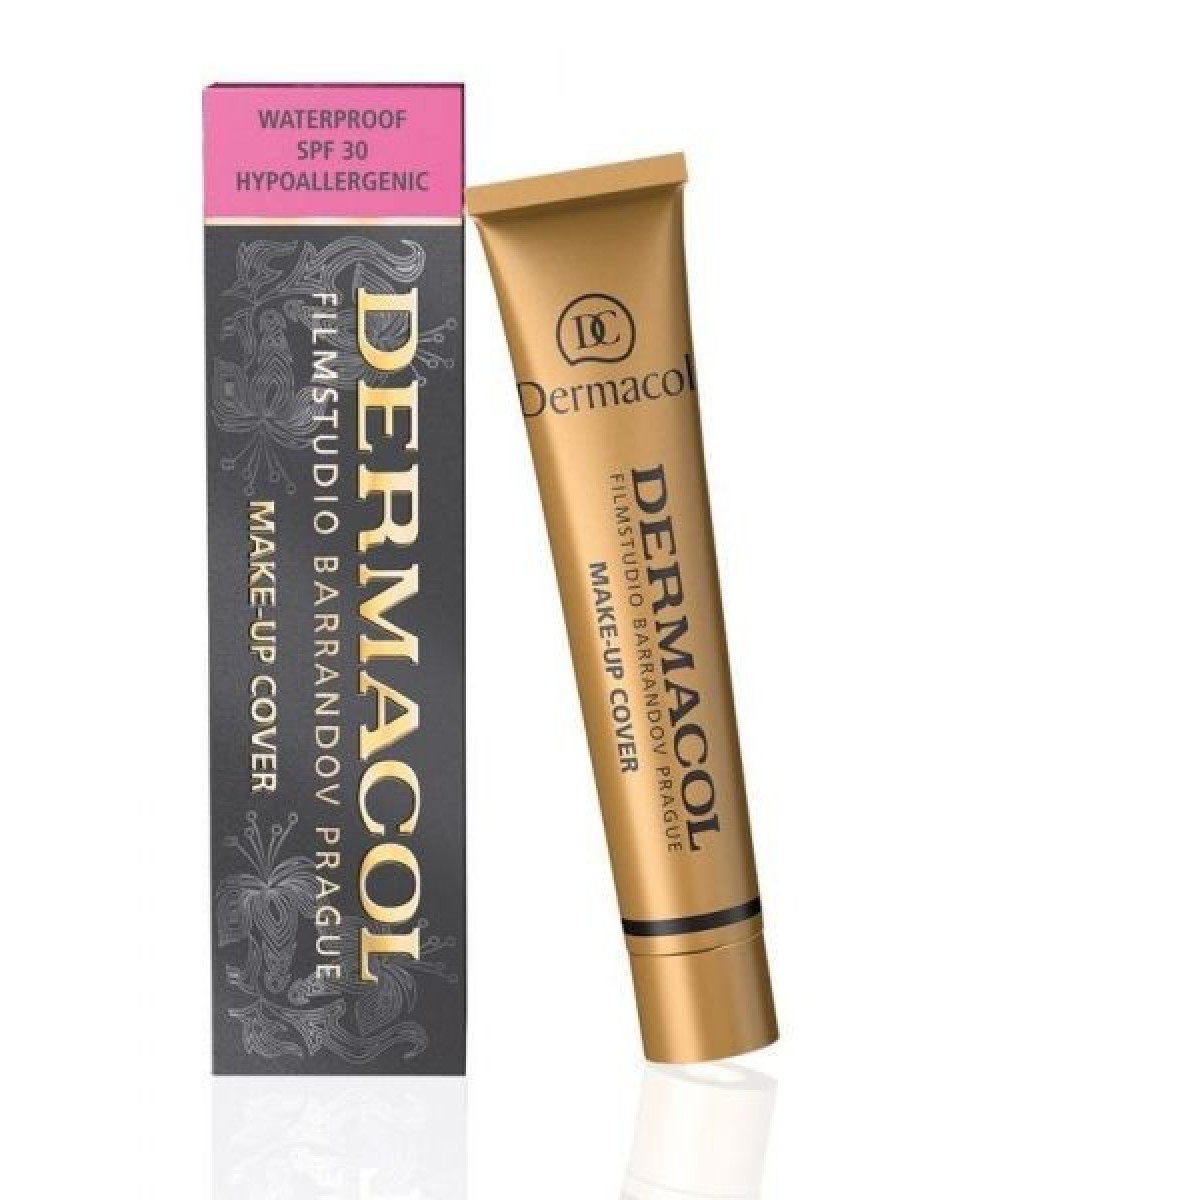 Dermacol | Make-Up Cover Waterproof SPF30 Foundation Υψηλής Κάλυψης | No.211 | 30g